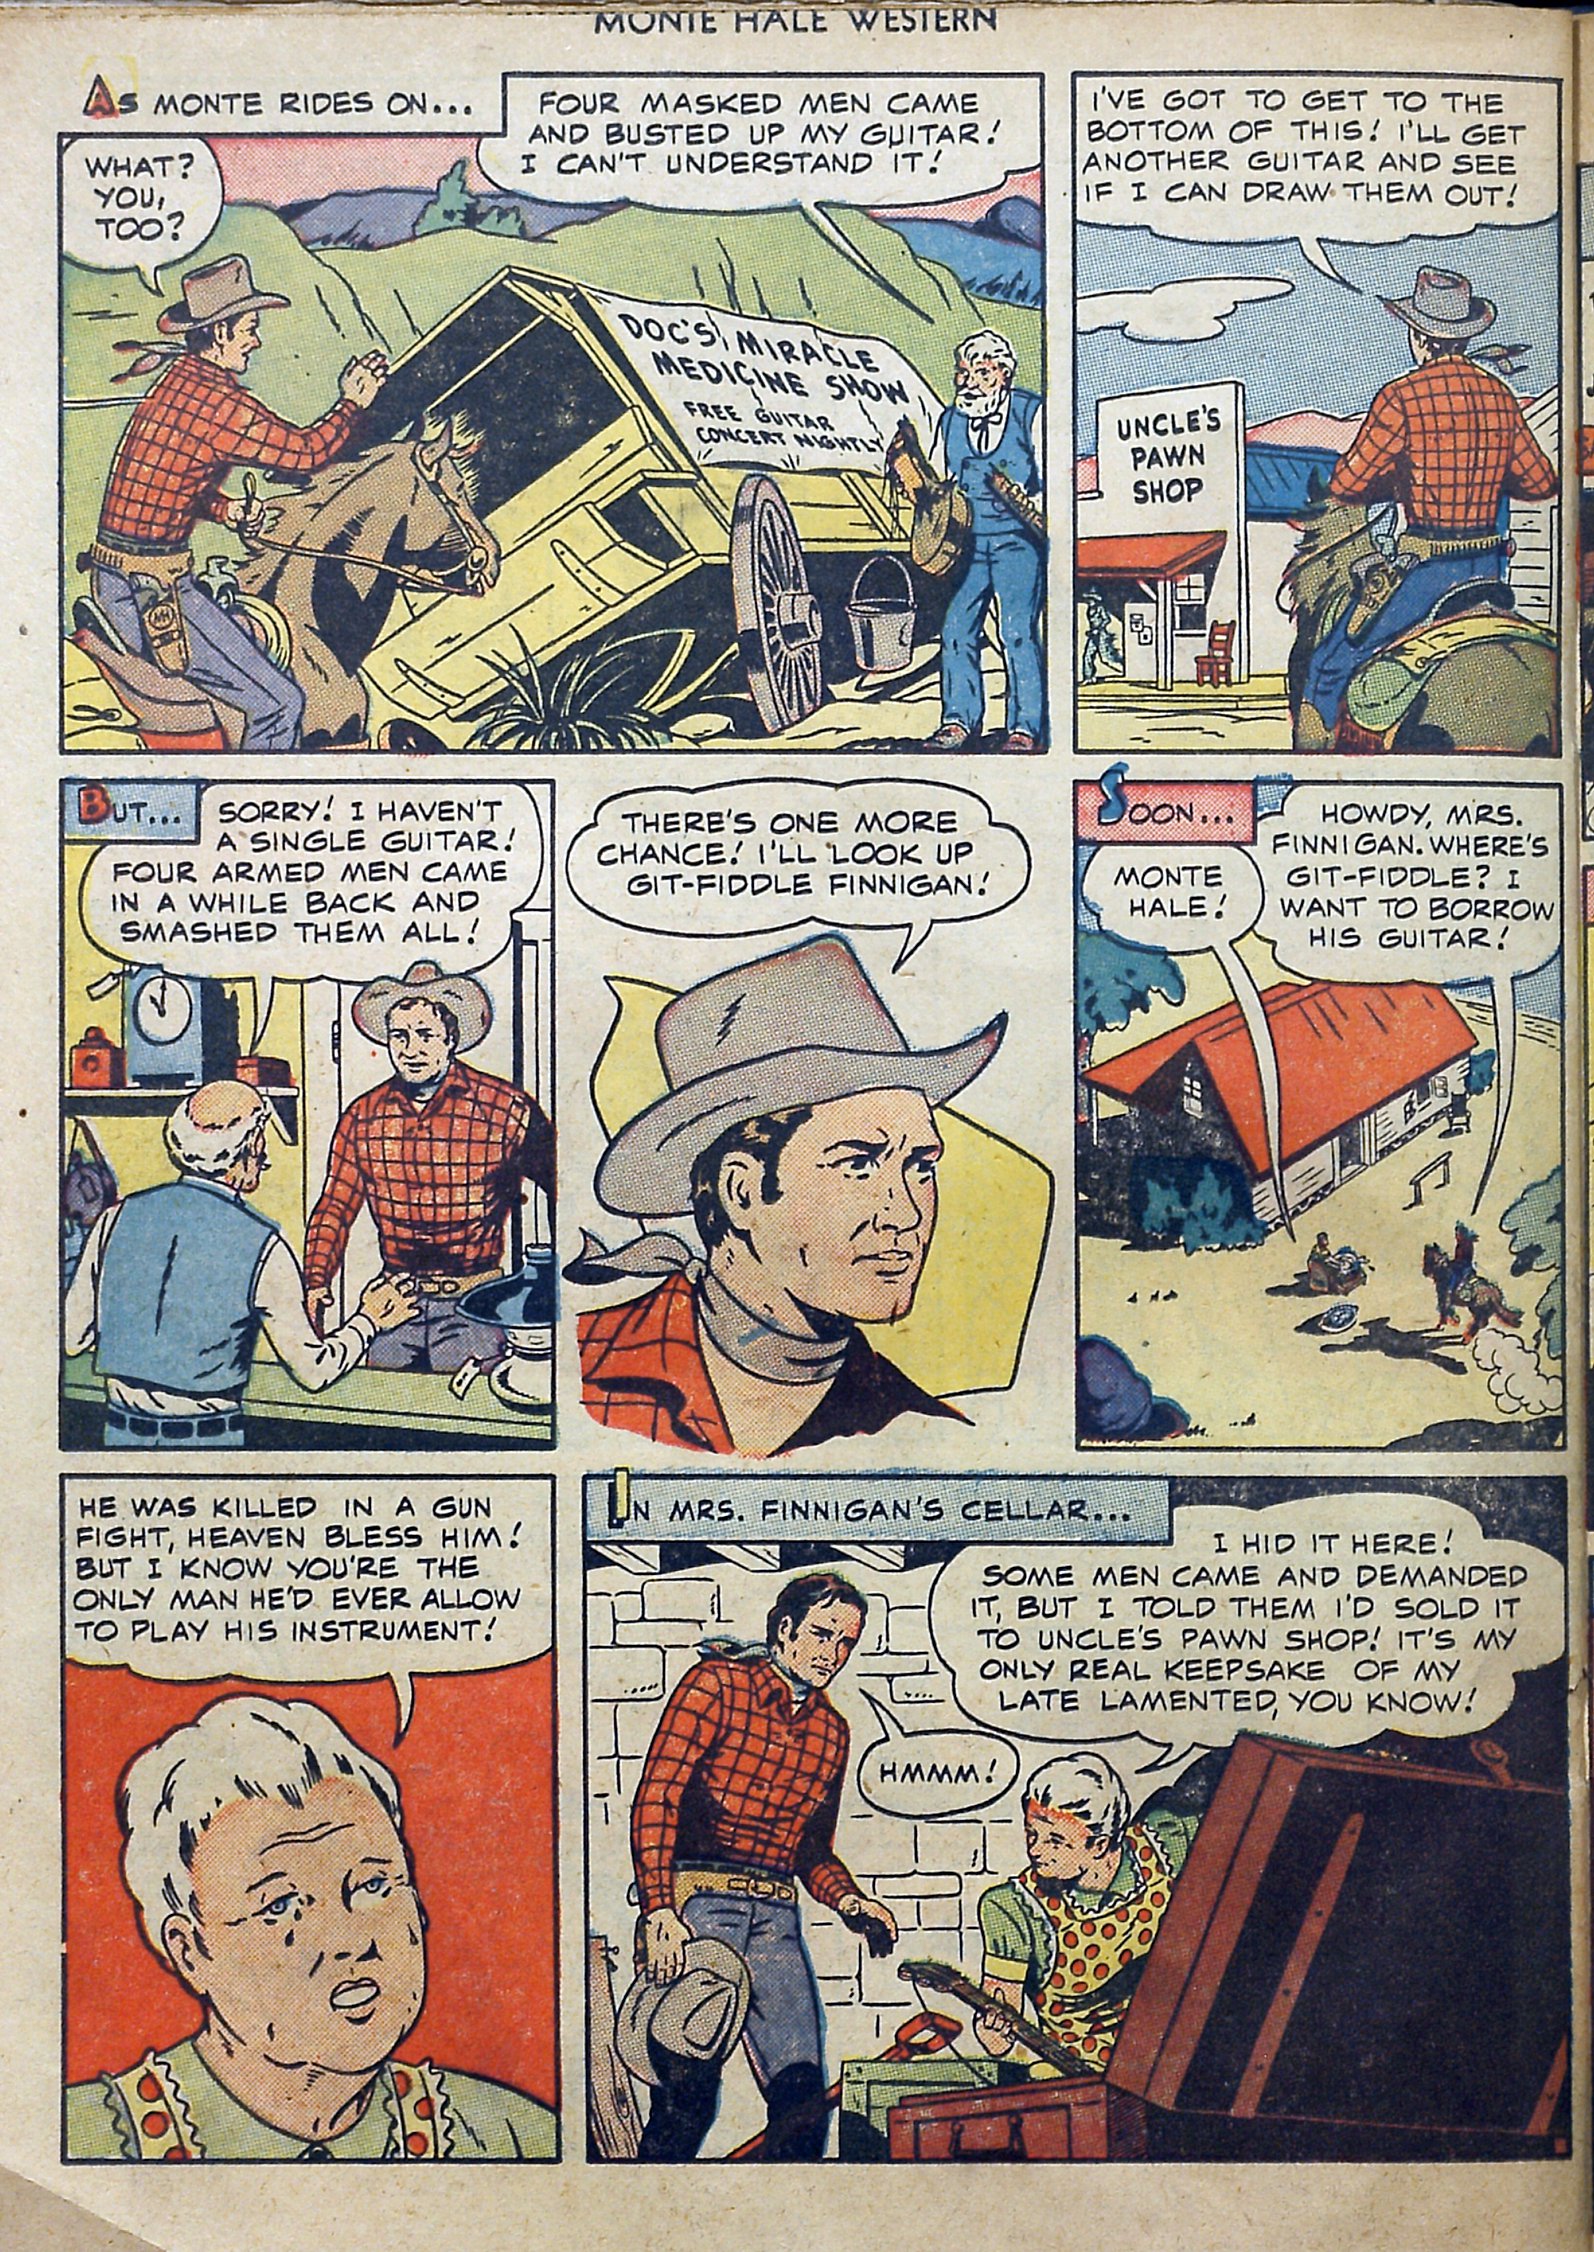 Read online Monte Hale Western comic -  Issue #46 - 30